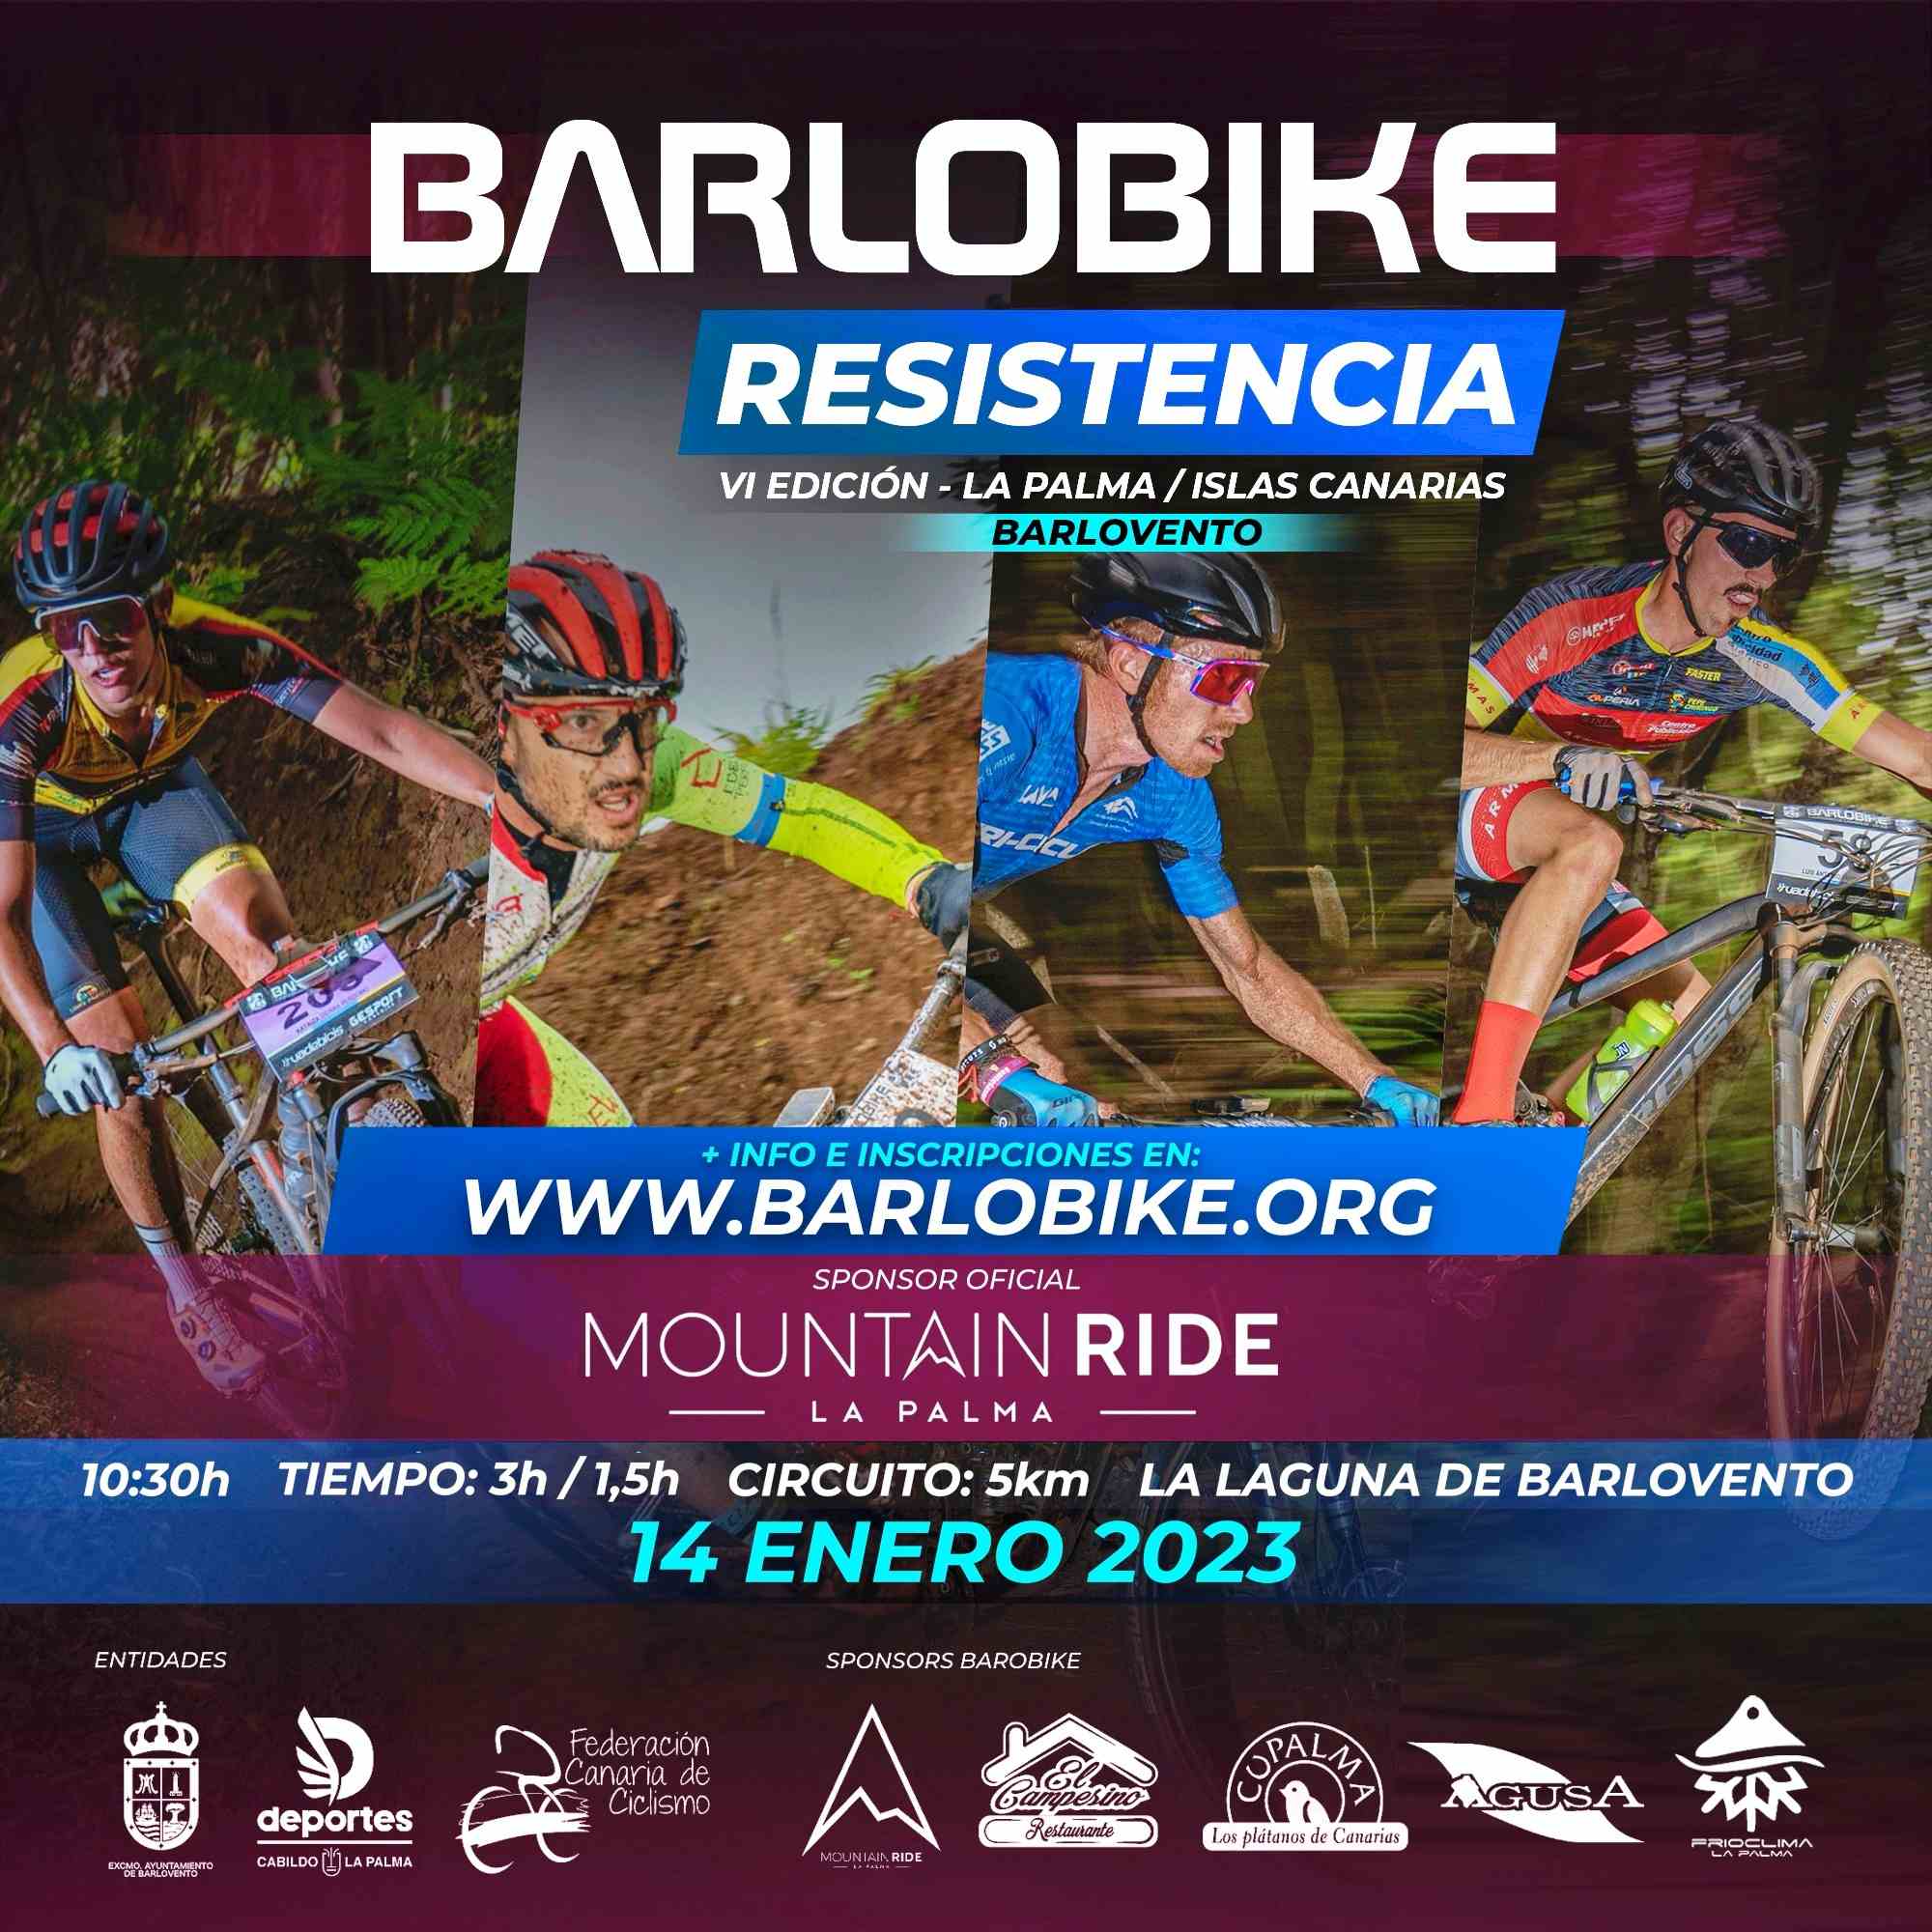 BARLOBIKE XC0 RESISTENCIA 2023 - Inscrivez-vous